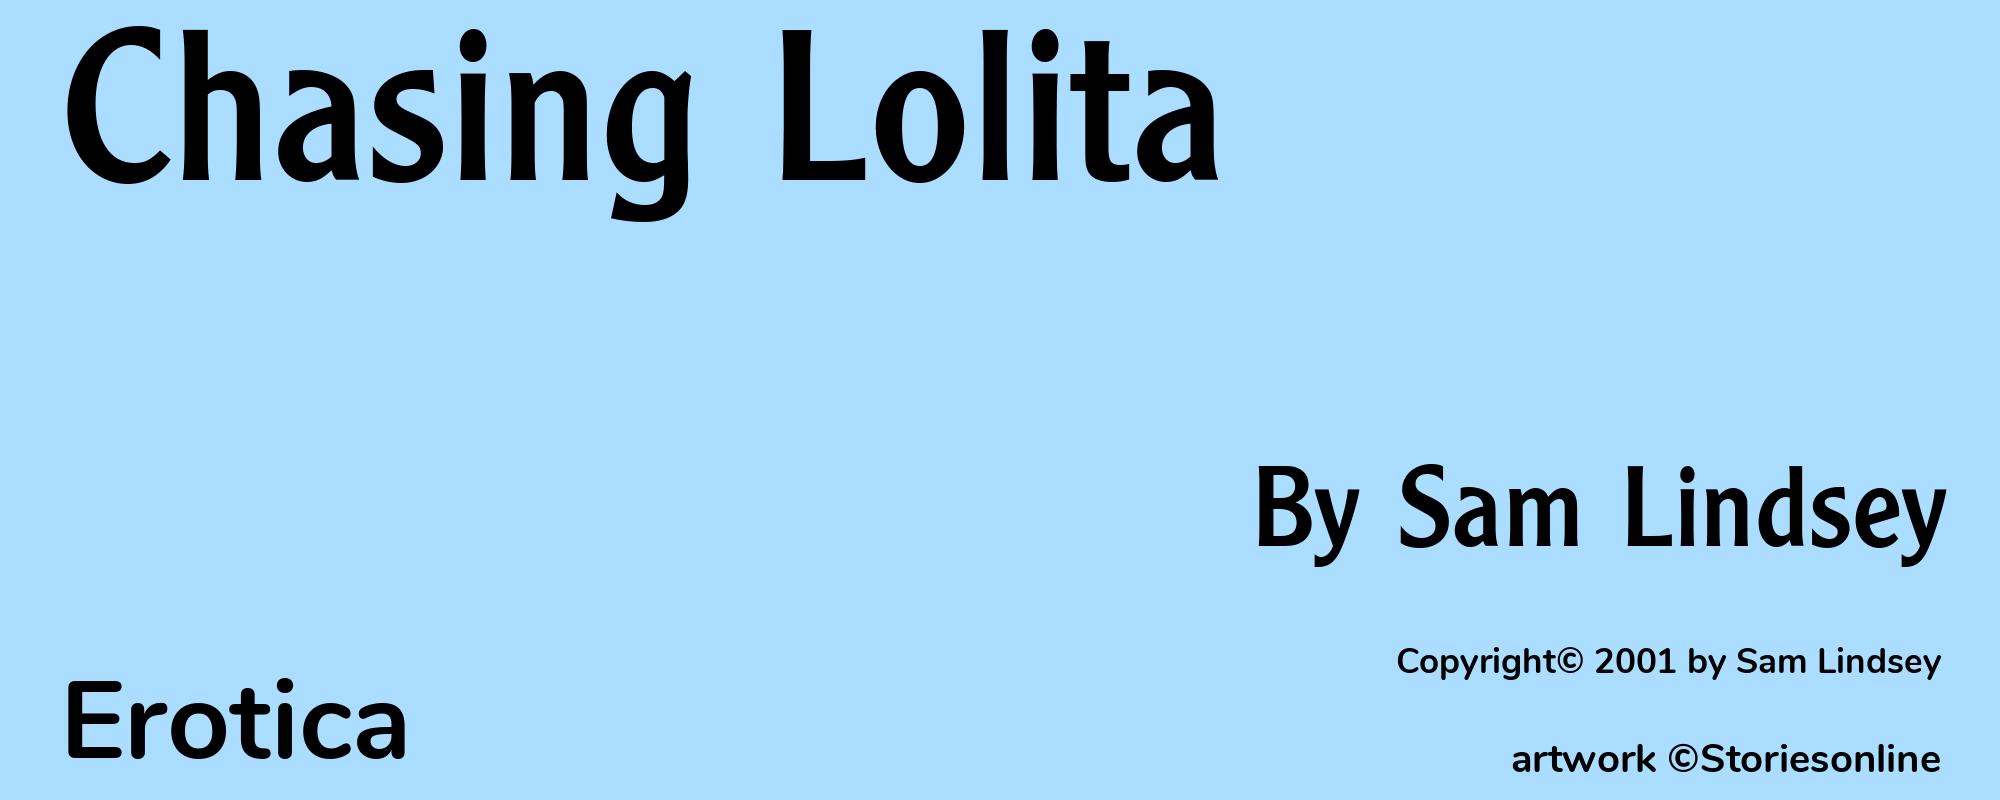 Chasing Lolita - Cover